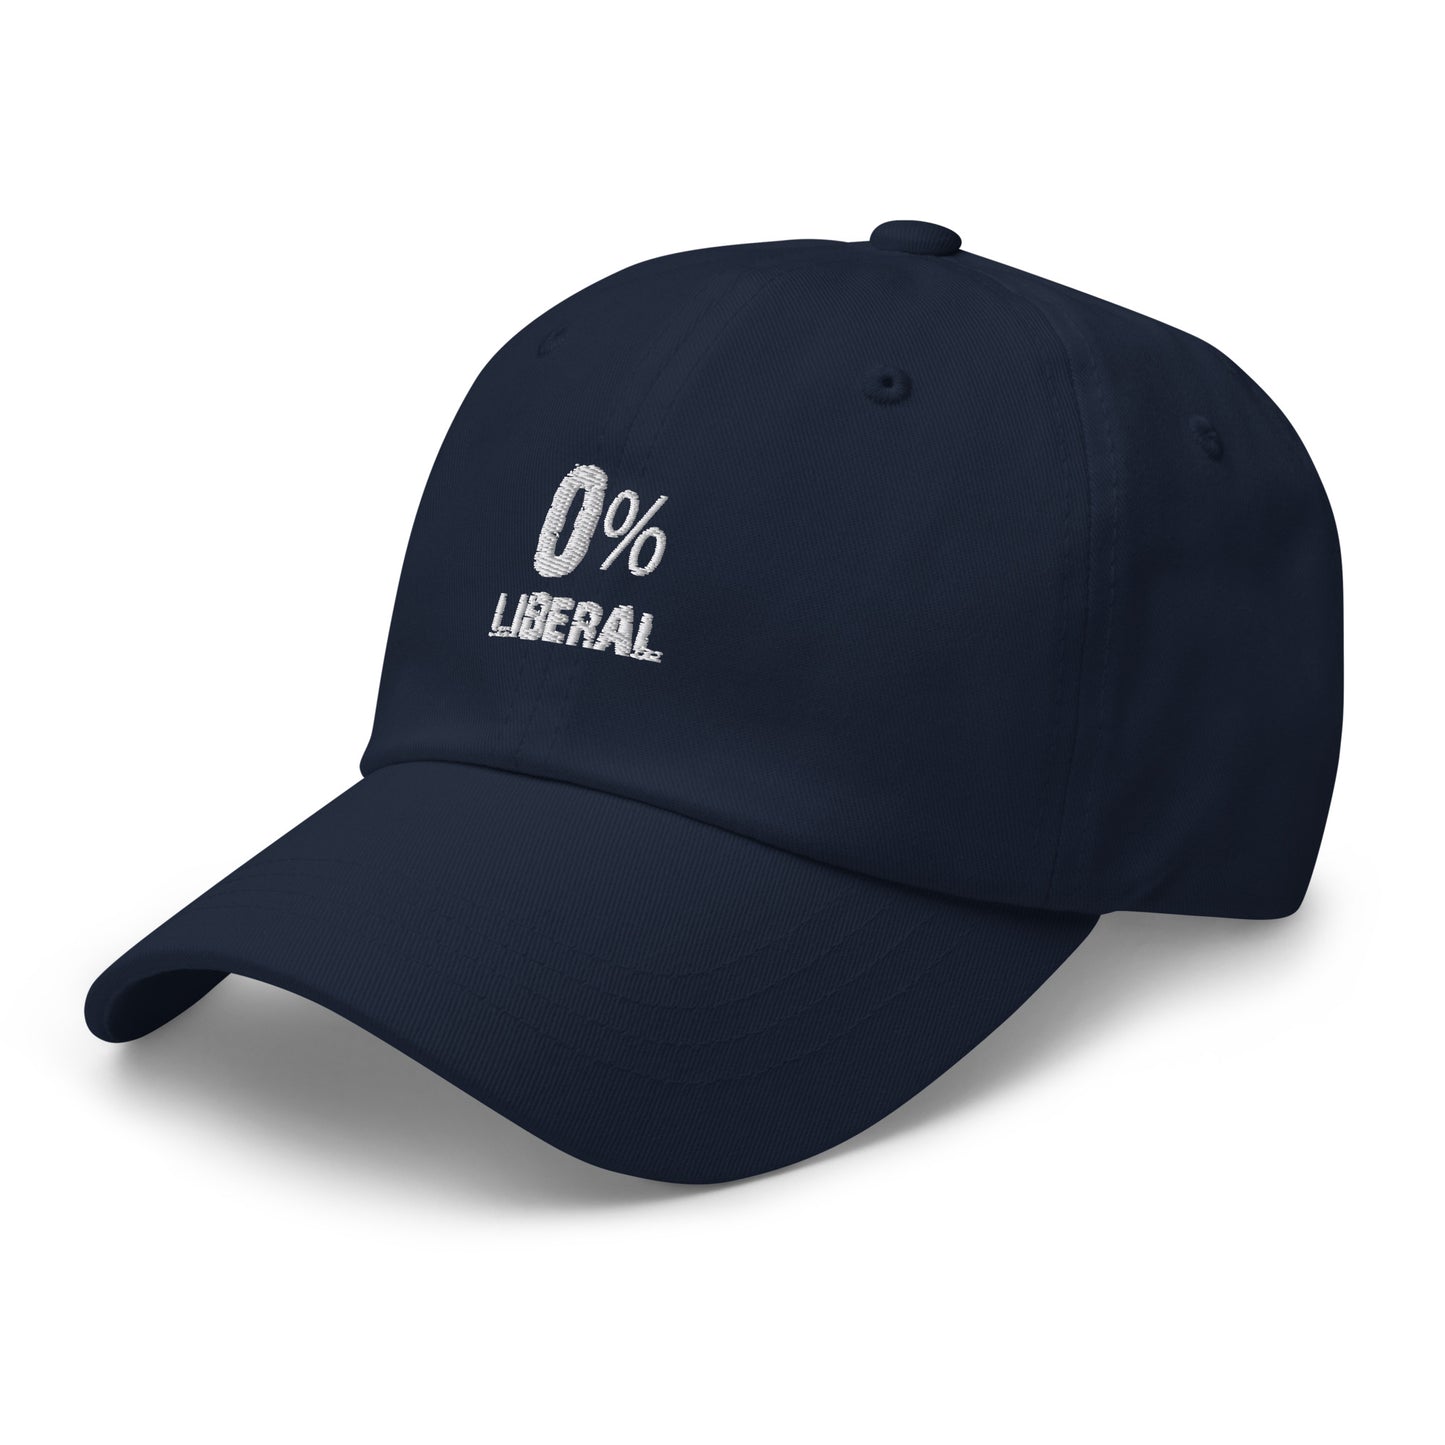 0% Liberal hat